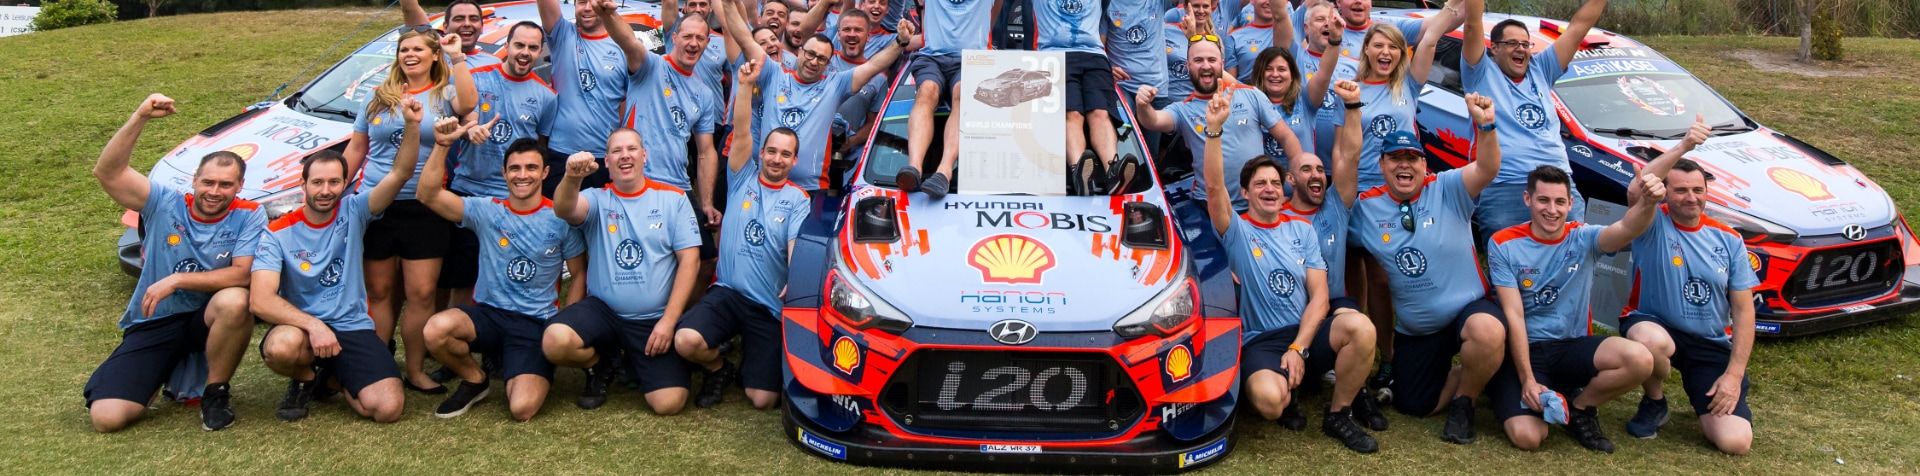 The Hyundai Motorsports team celebrating with 3 i20 WRC cars.